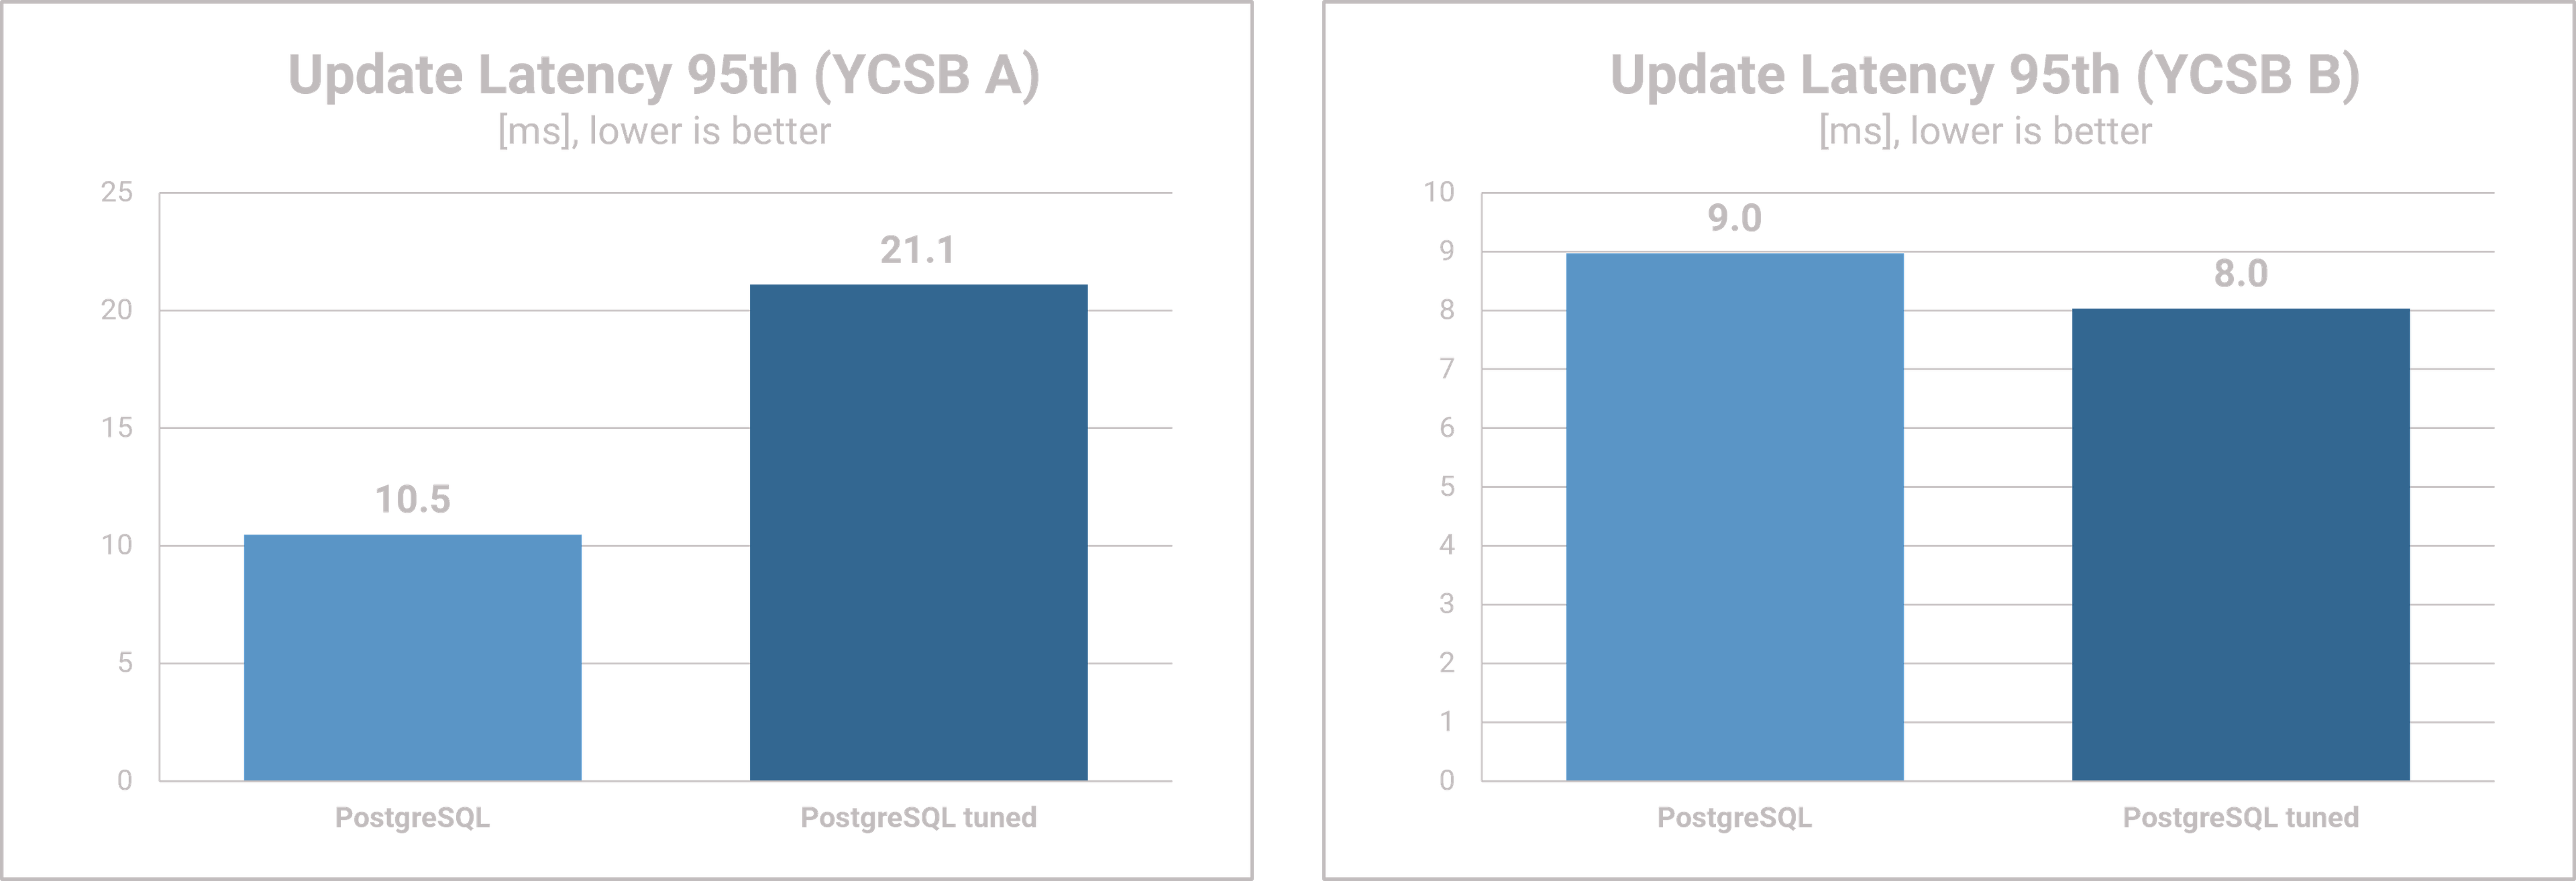 PostgreSQL tuning - Update Latency Results YCSB